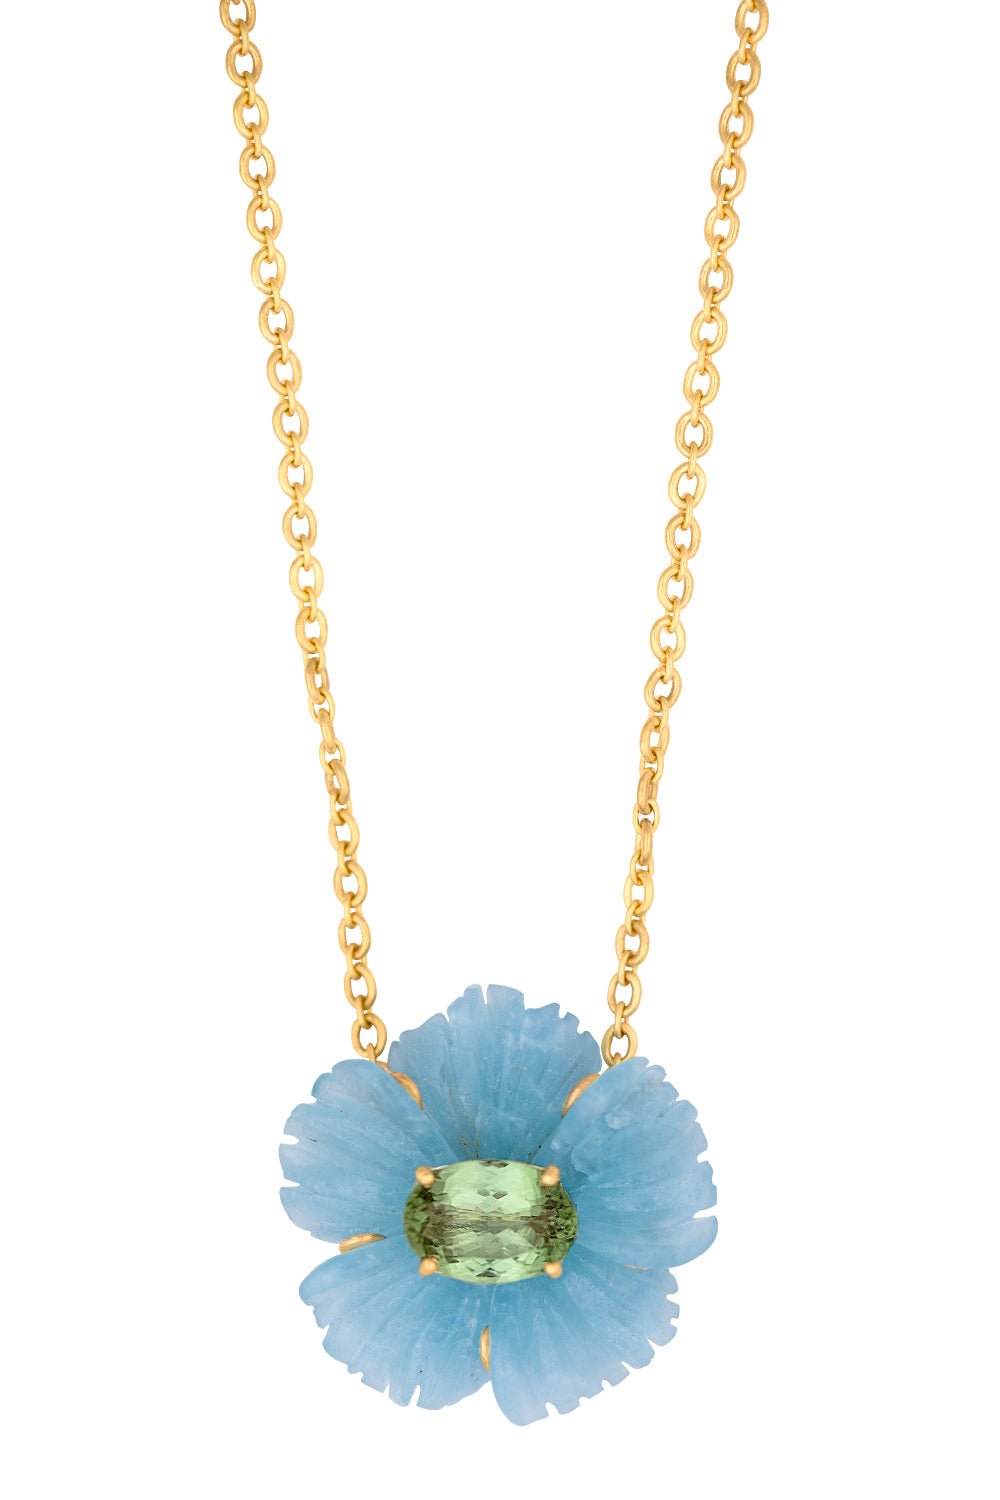 IRENE NEUWIRTH JEWELRY-Aquamarine Botanical Tropical Flower Necklace-YELLOW GOLD